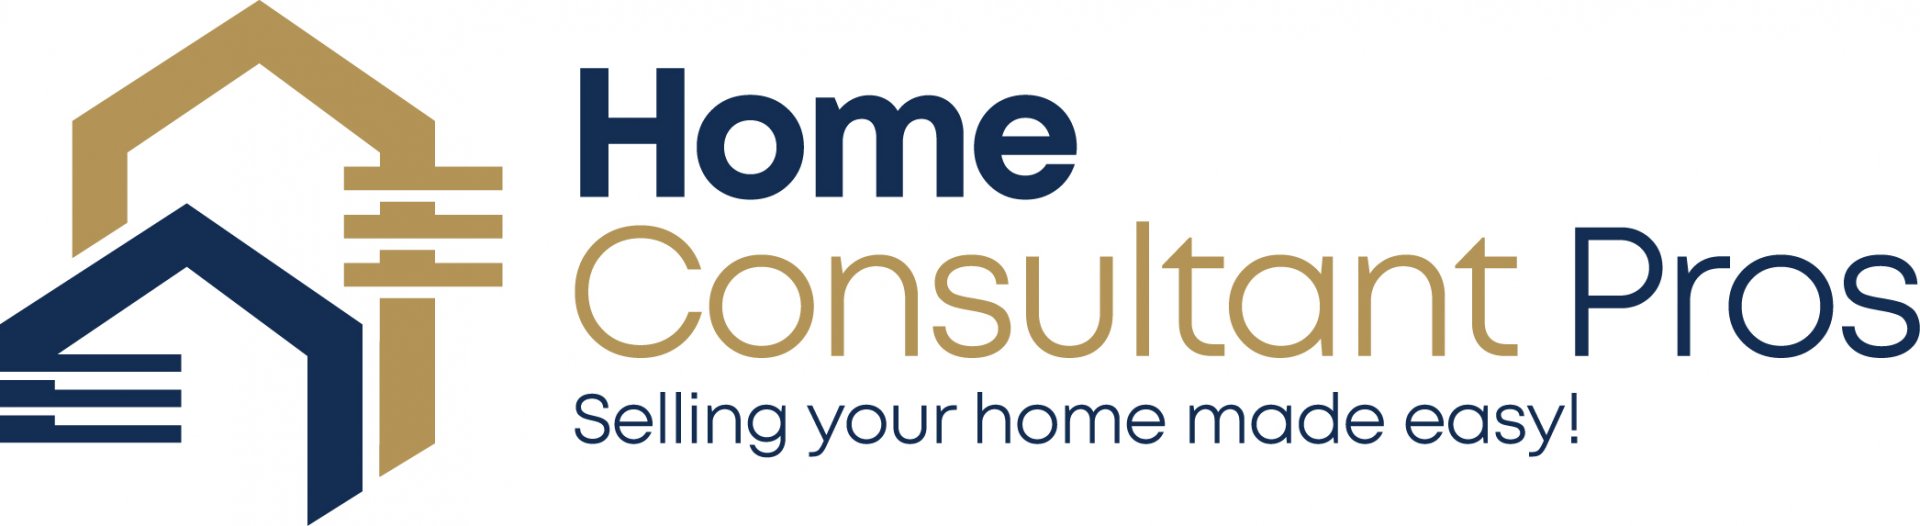 Home Consultant Pros logo